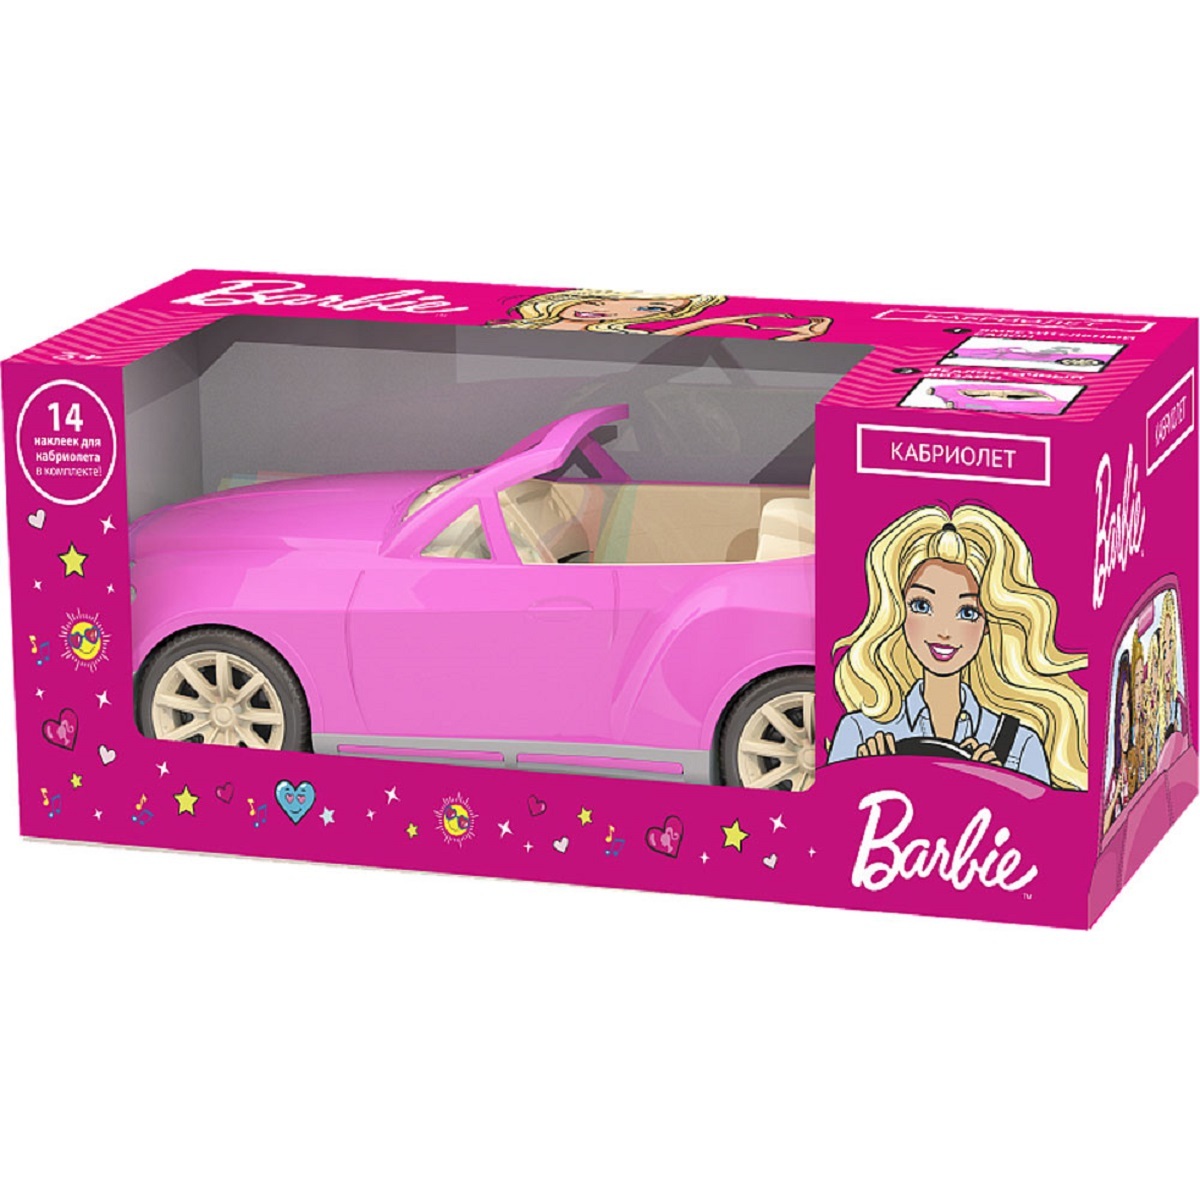 Машина для кукол купить. Машина для кукол Нордпласт кабриолет нимфа 297. Машинка Barbie dvx59 кабриолет. Кабриолет Барби Нордпласт. Автомобиль для кукол Барби Нордпласт.